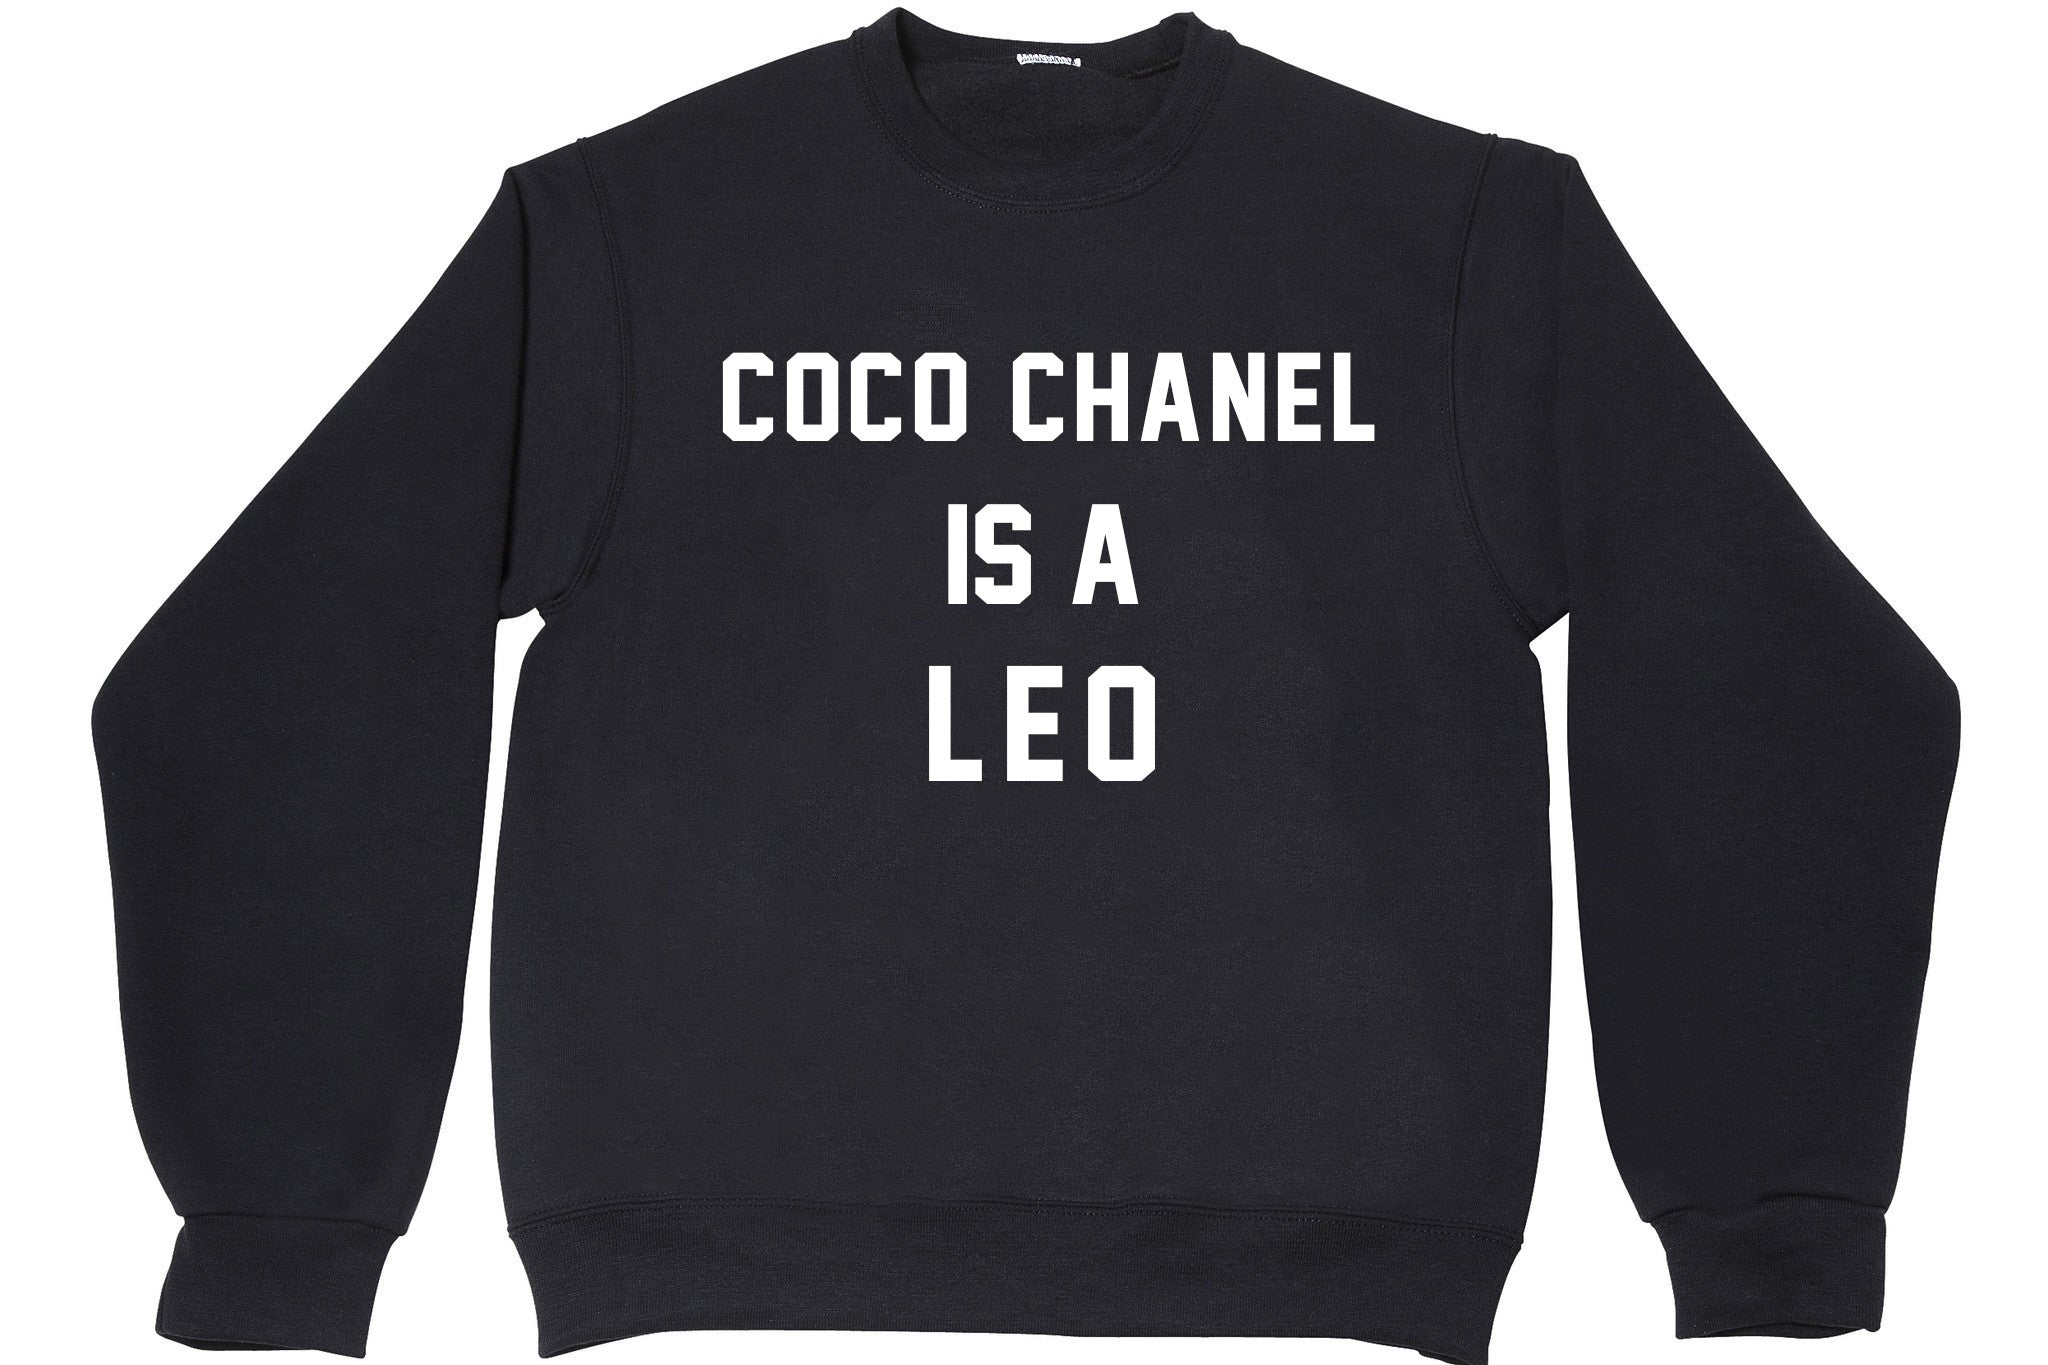 the coco and chanel sweatshirt